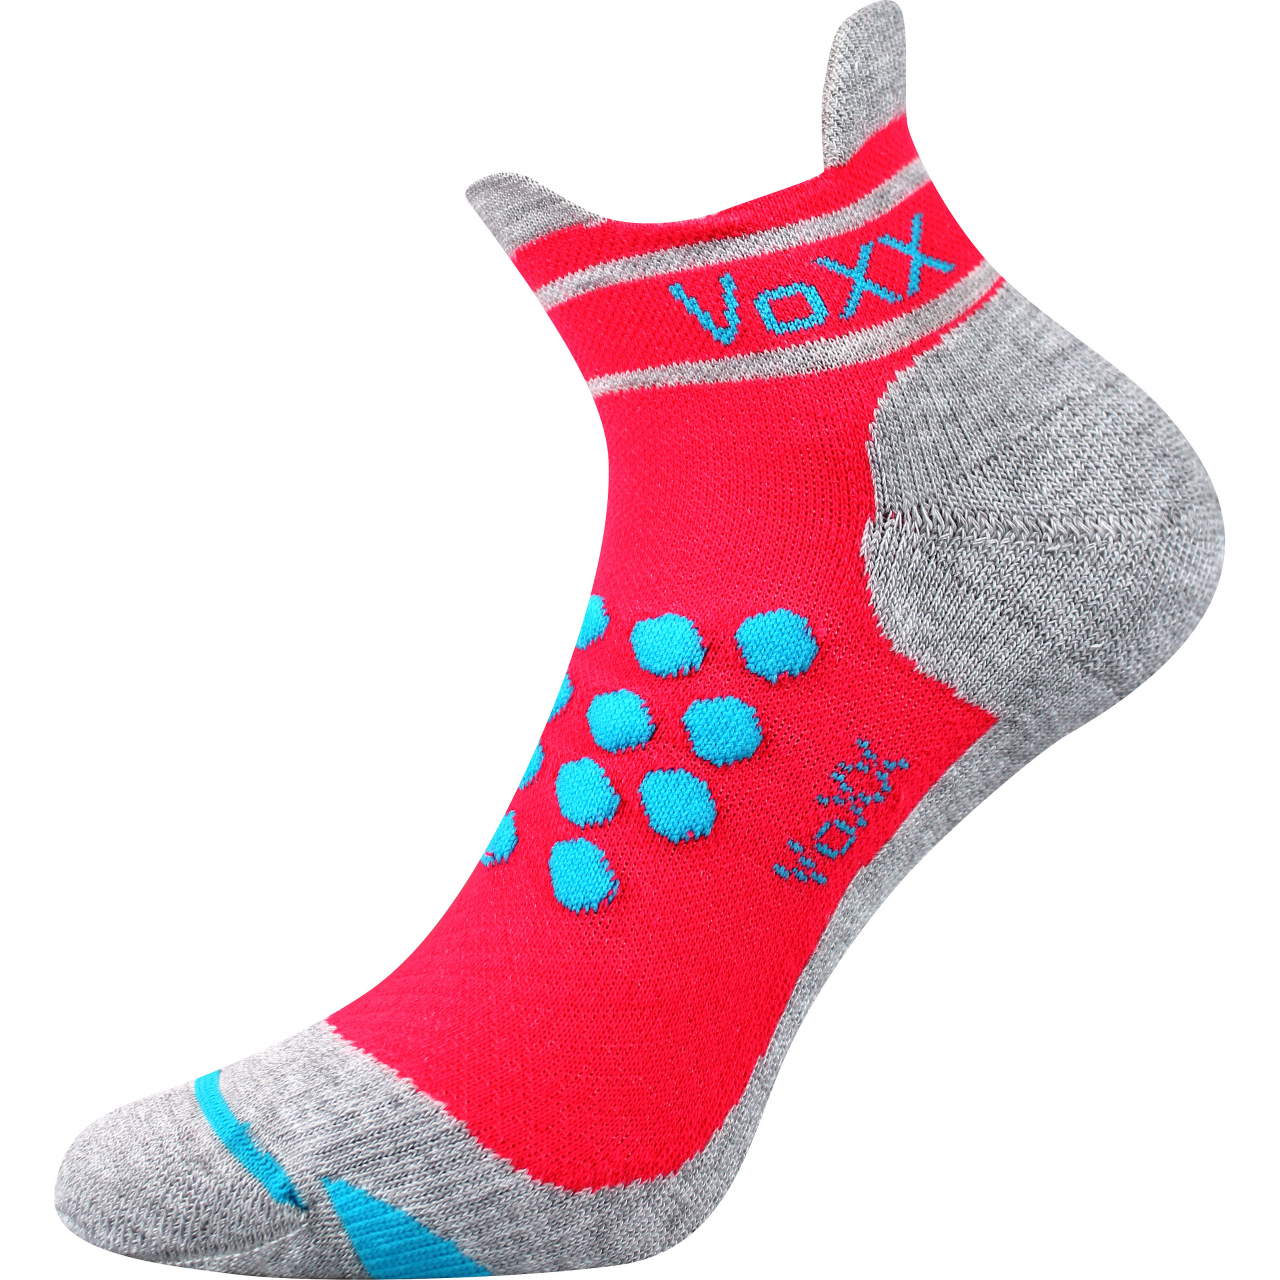 Ponožky unisex sportovní Voxx Sprinter - růžové-šedé, 39-42